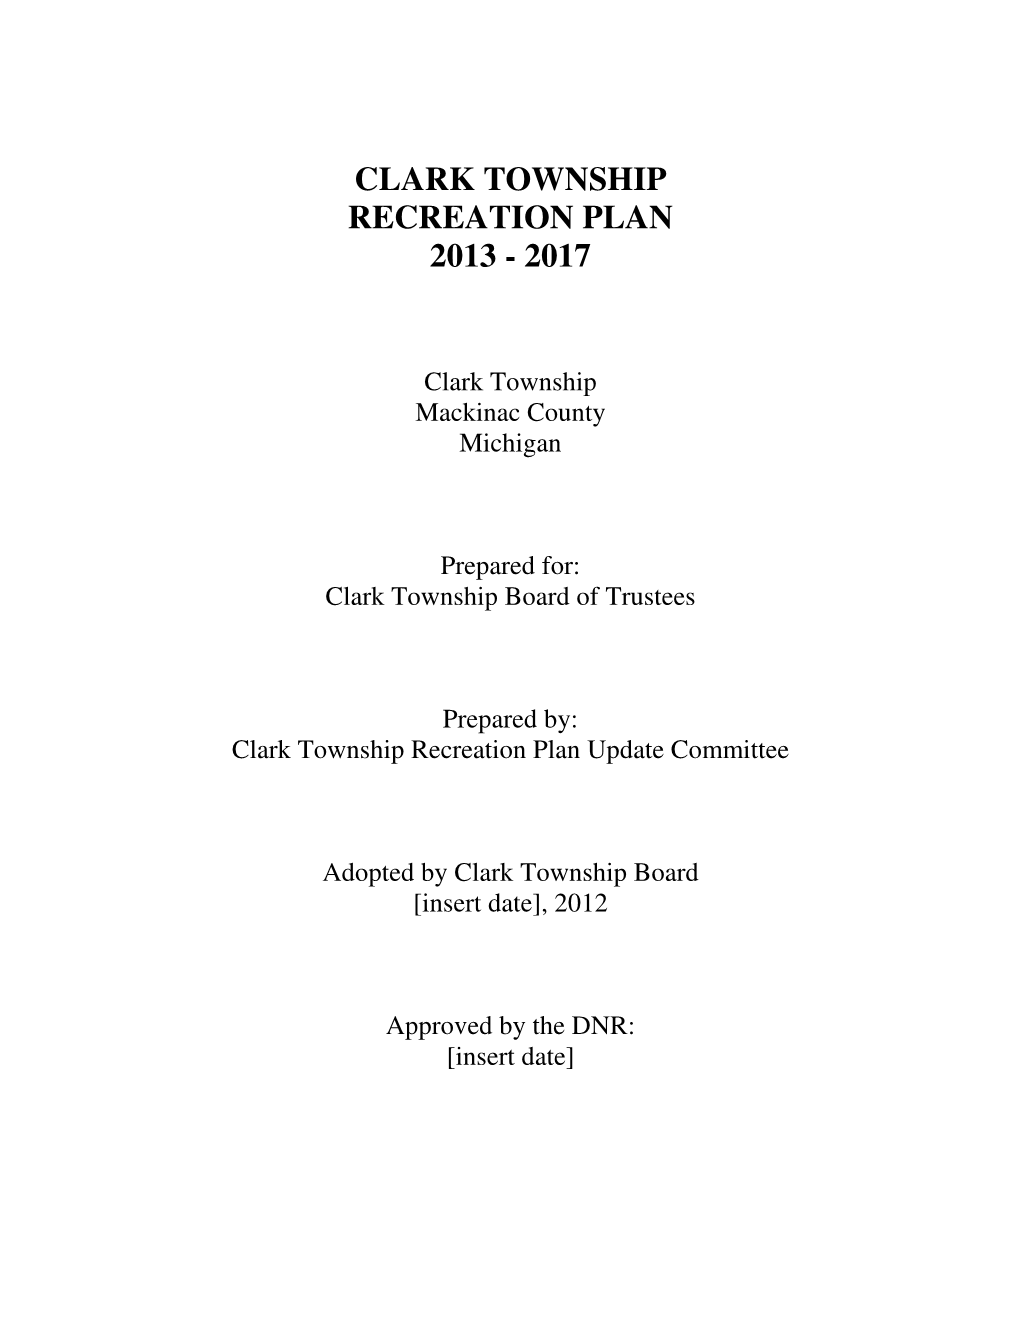 Clark Township Recreation Plan 2013 - 2017